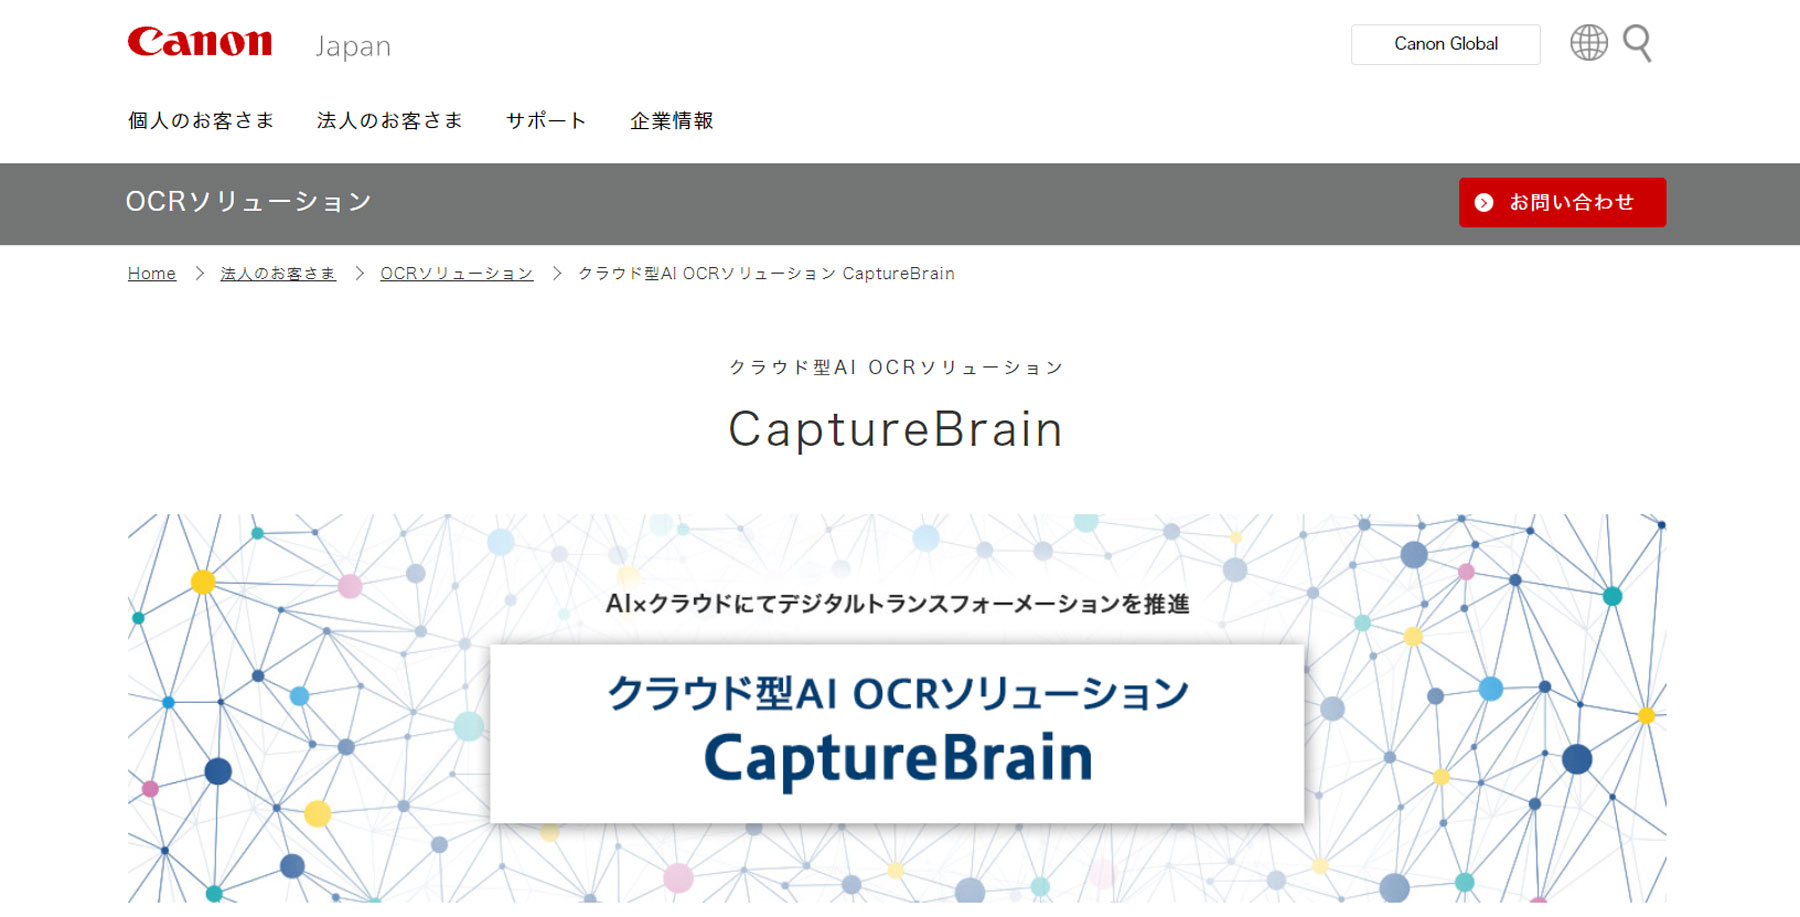 CaptureBrain公式Webサイト